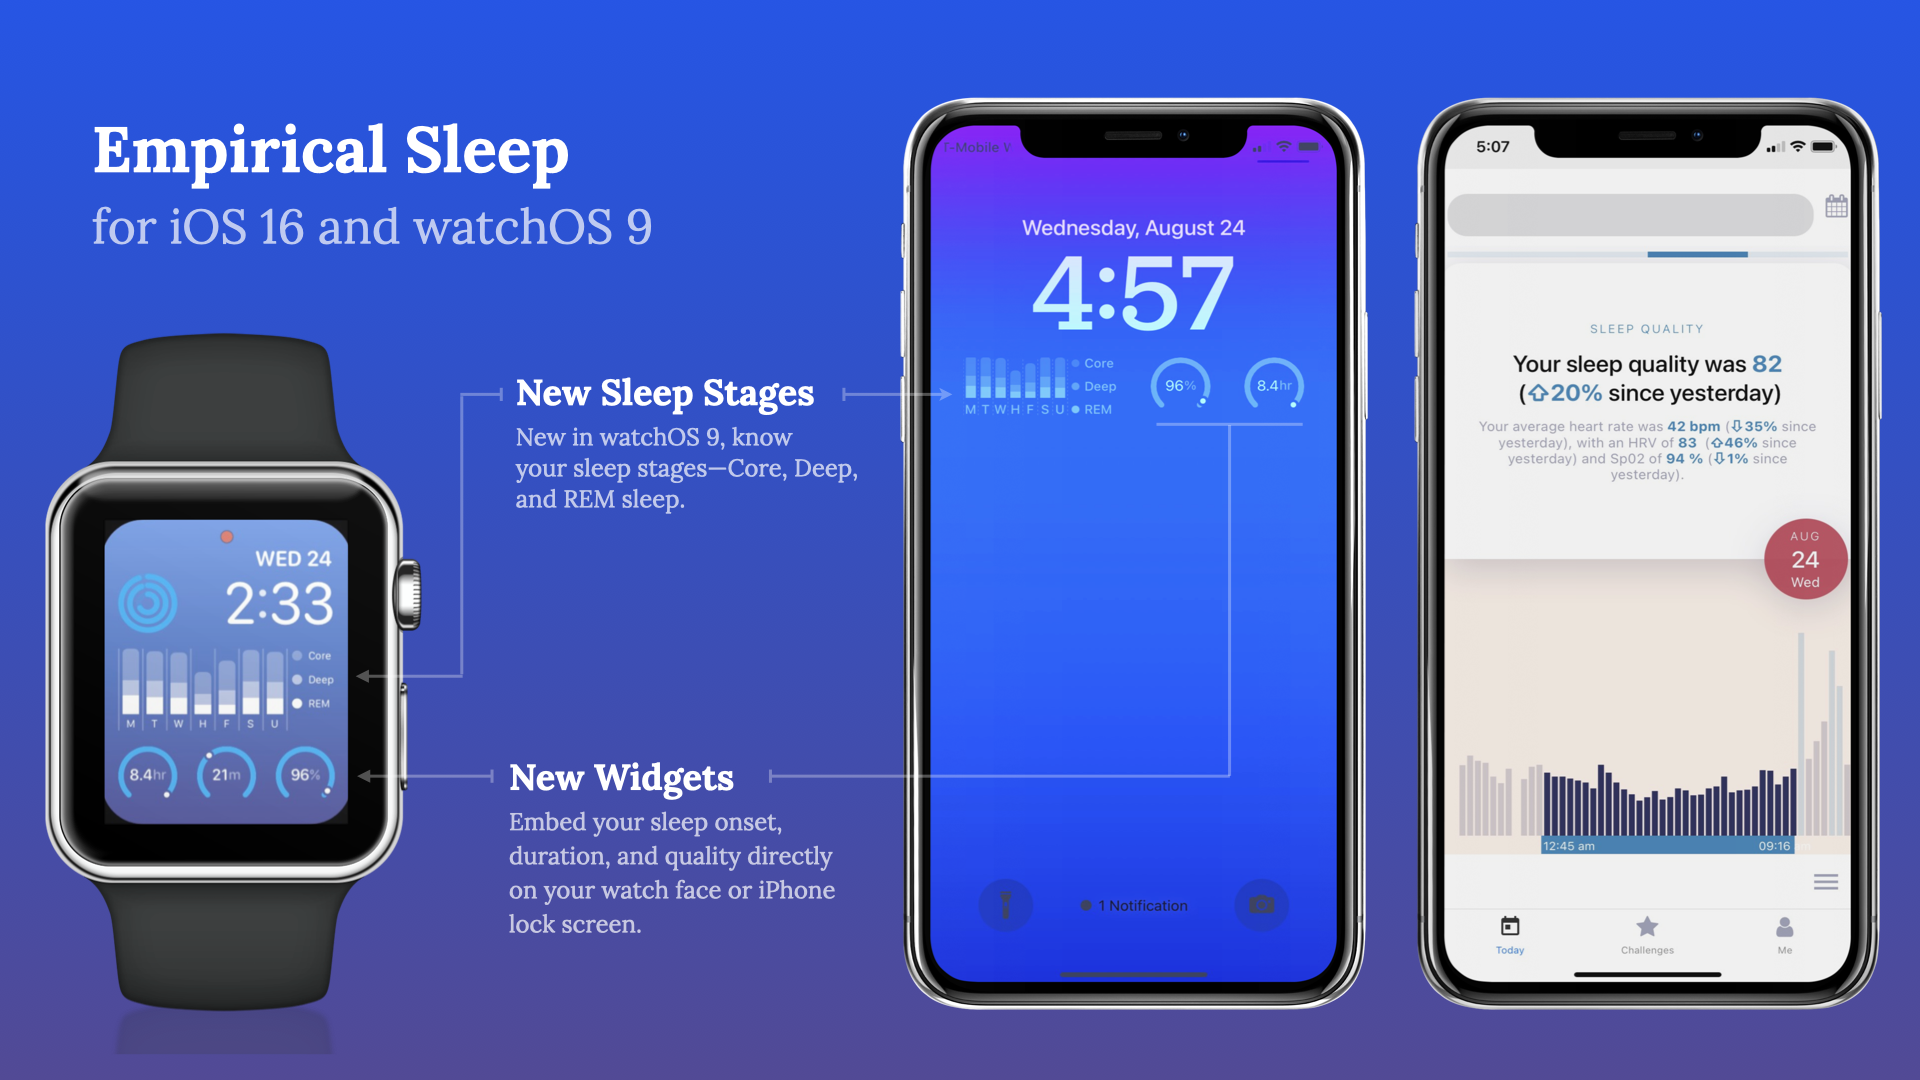 Empirical Sleep for watchOS9 - new features